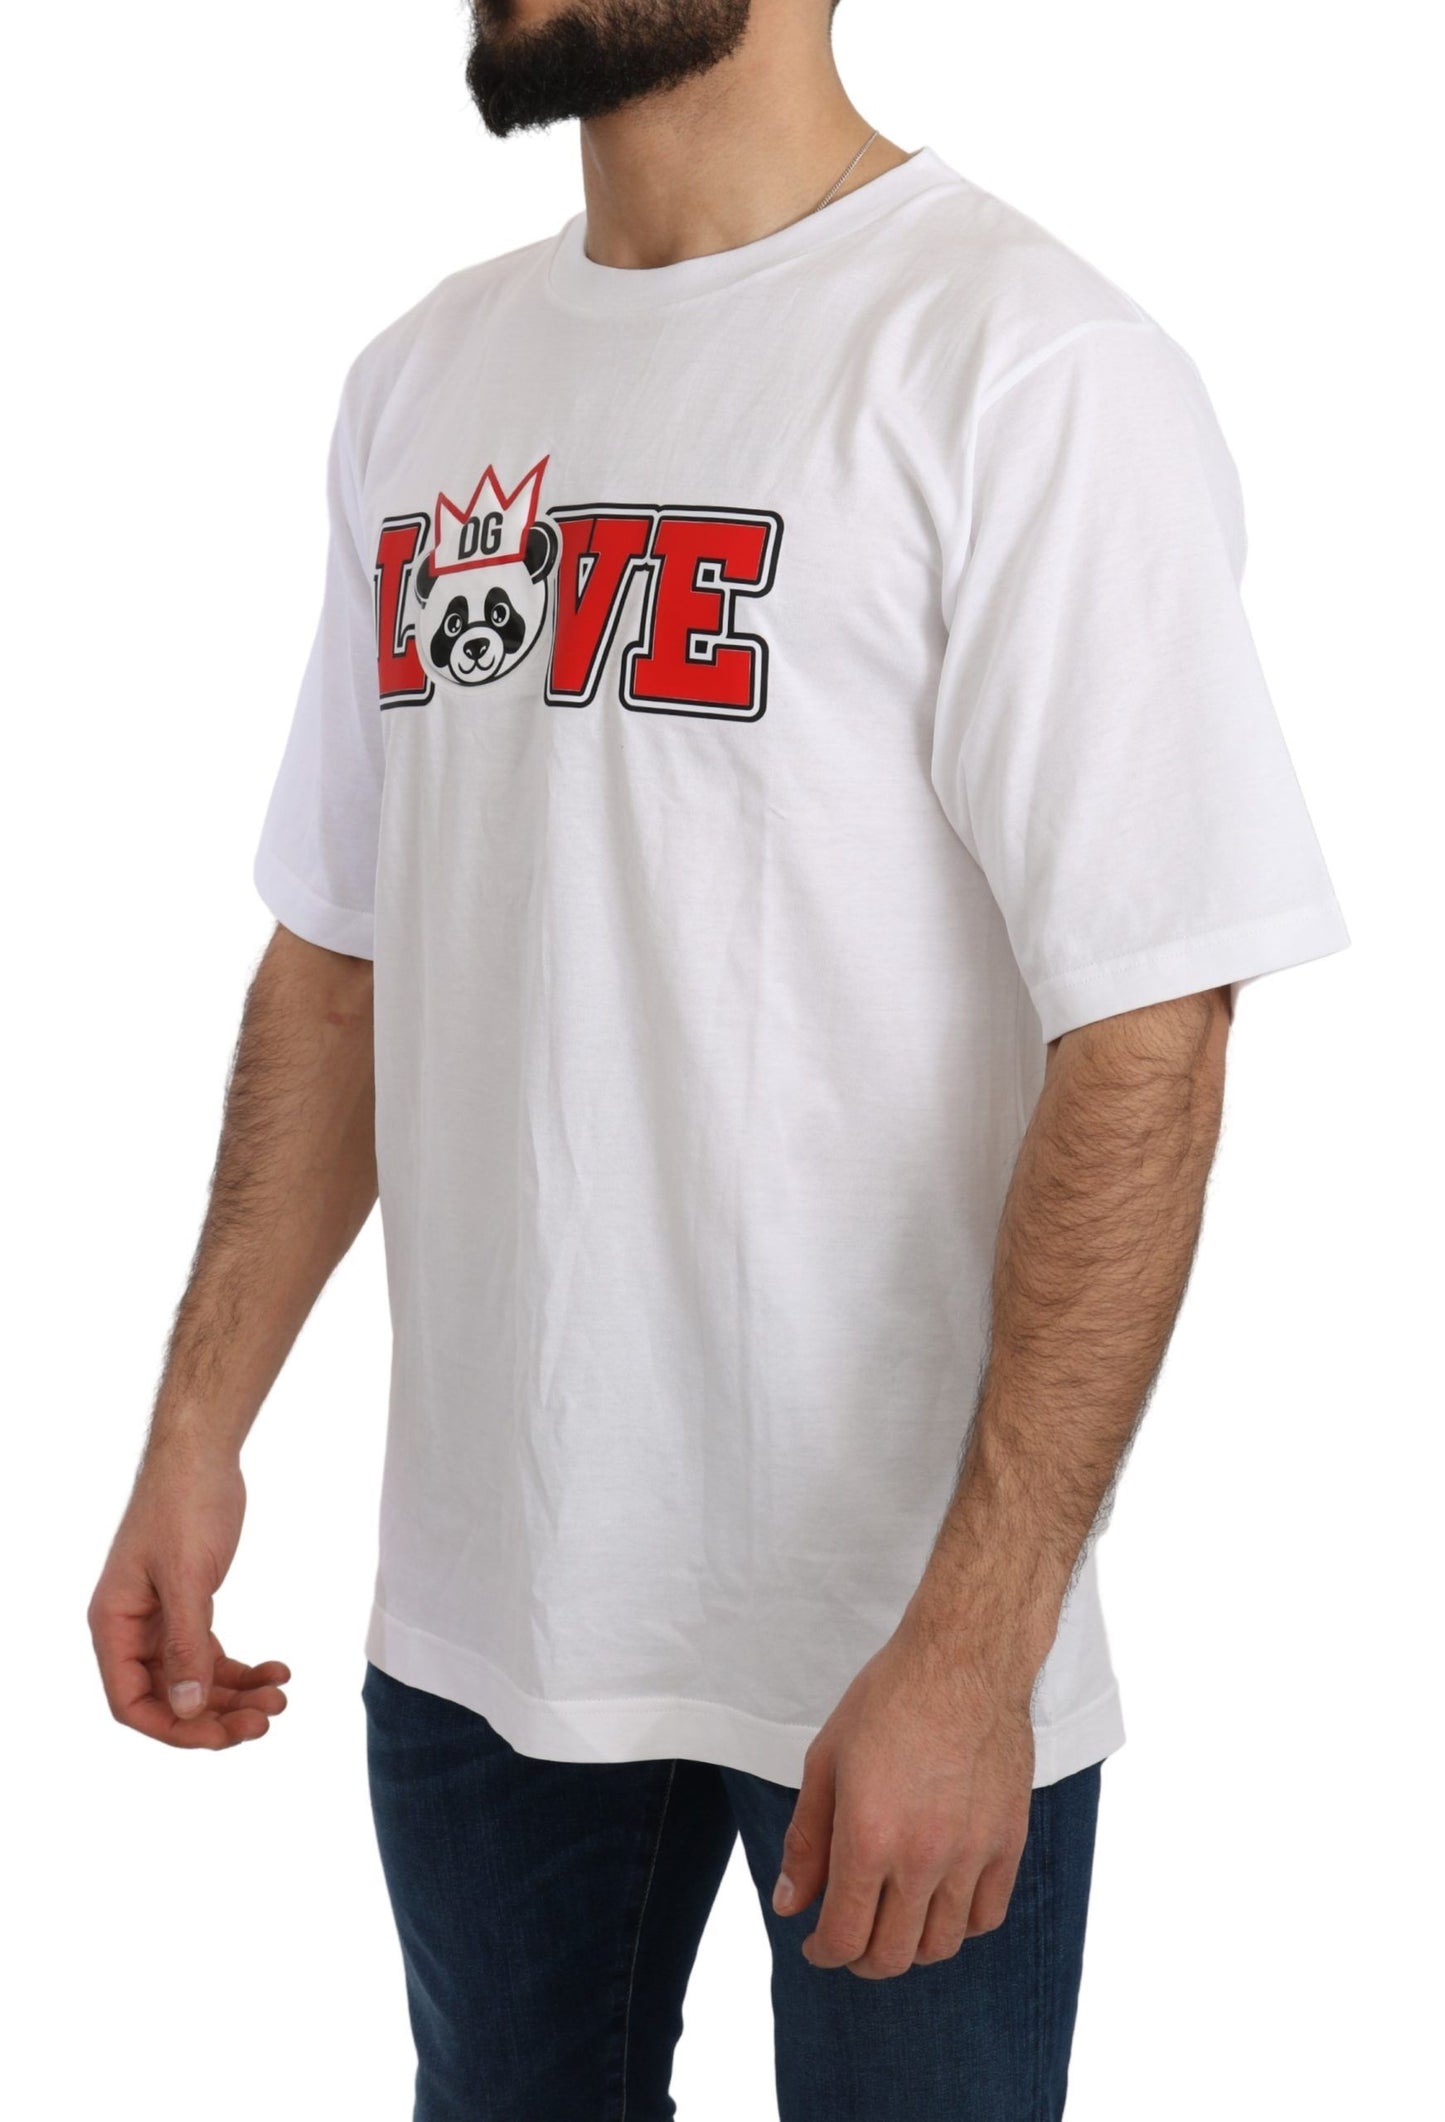 White Love Panda Print Top T-shirt